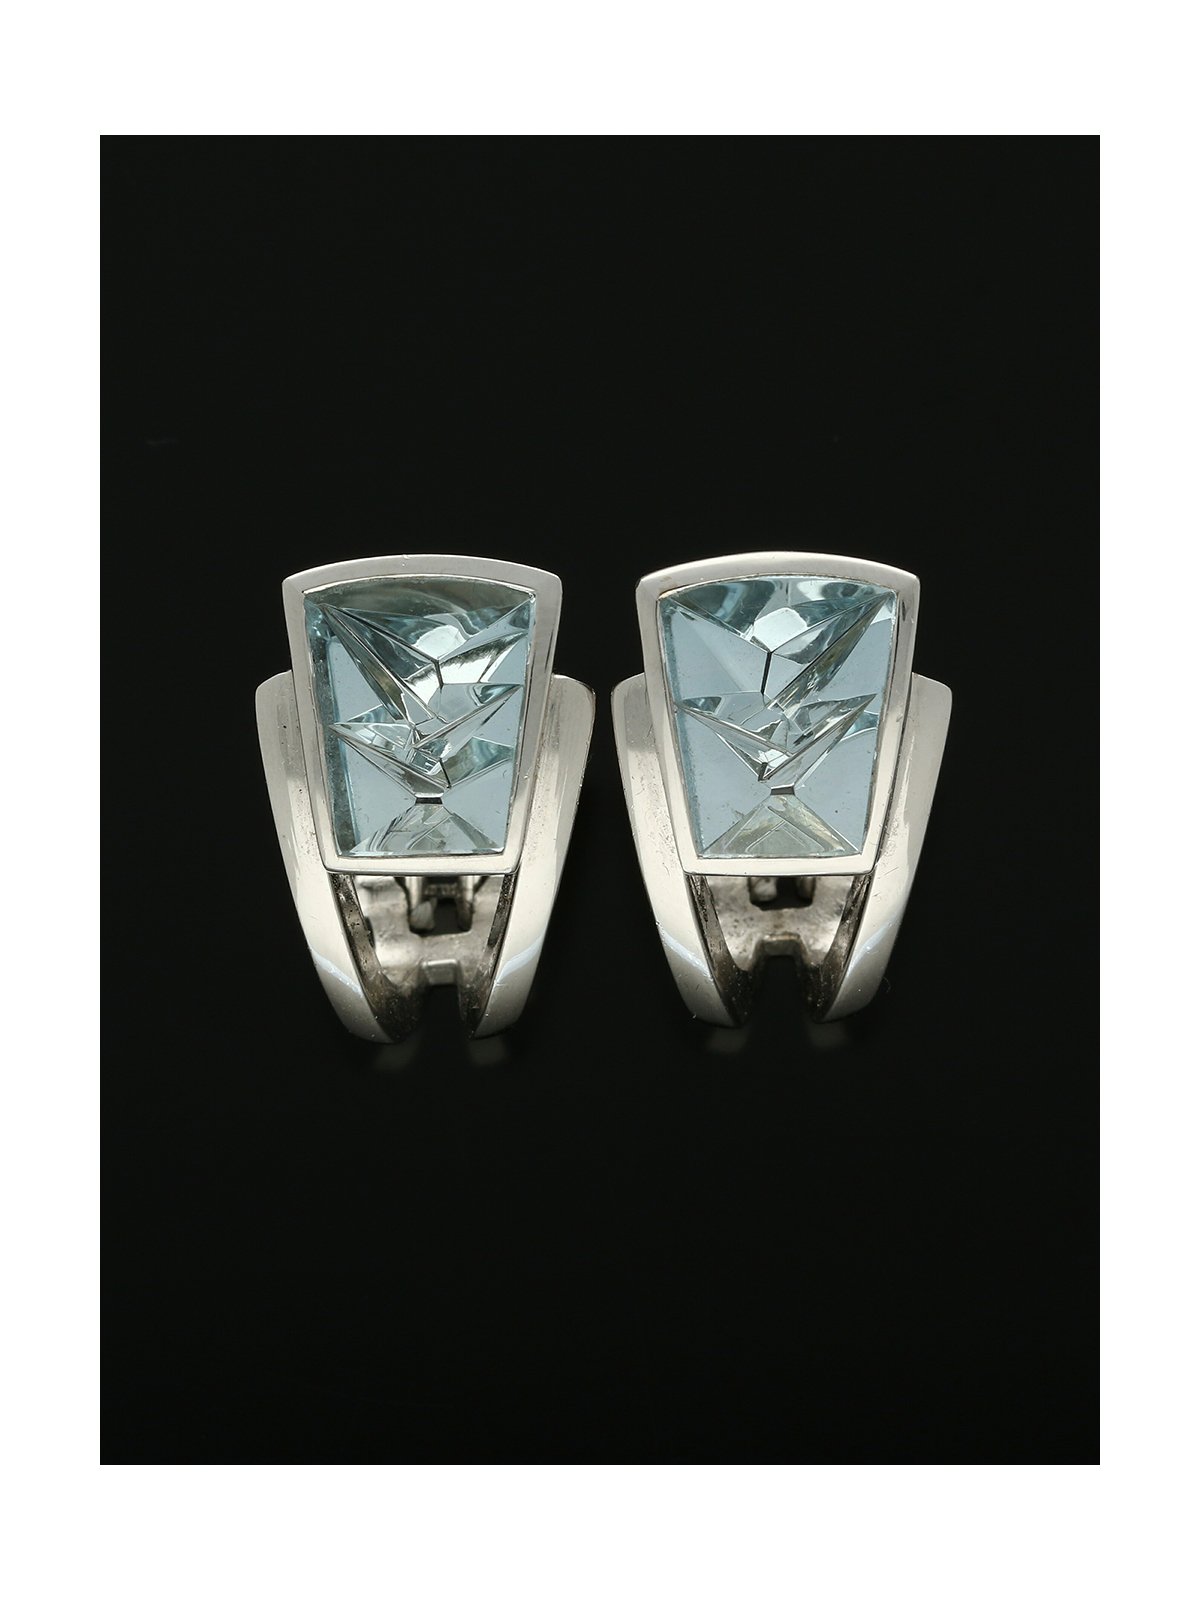 Aquamarine Munsteiner Cut Earrings in 18ct White Gold